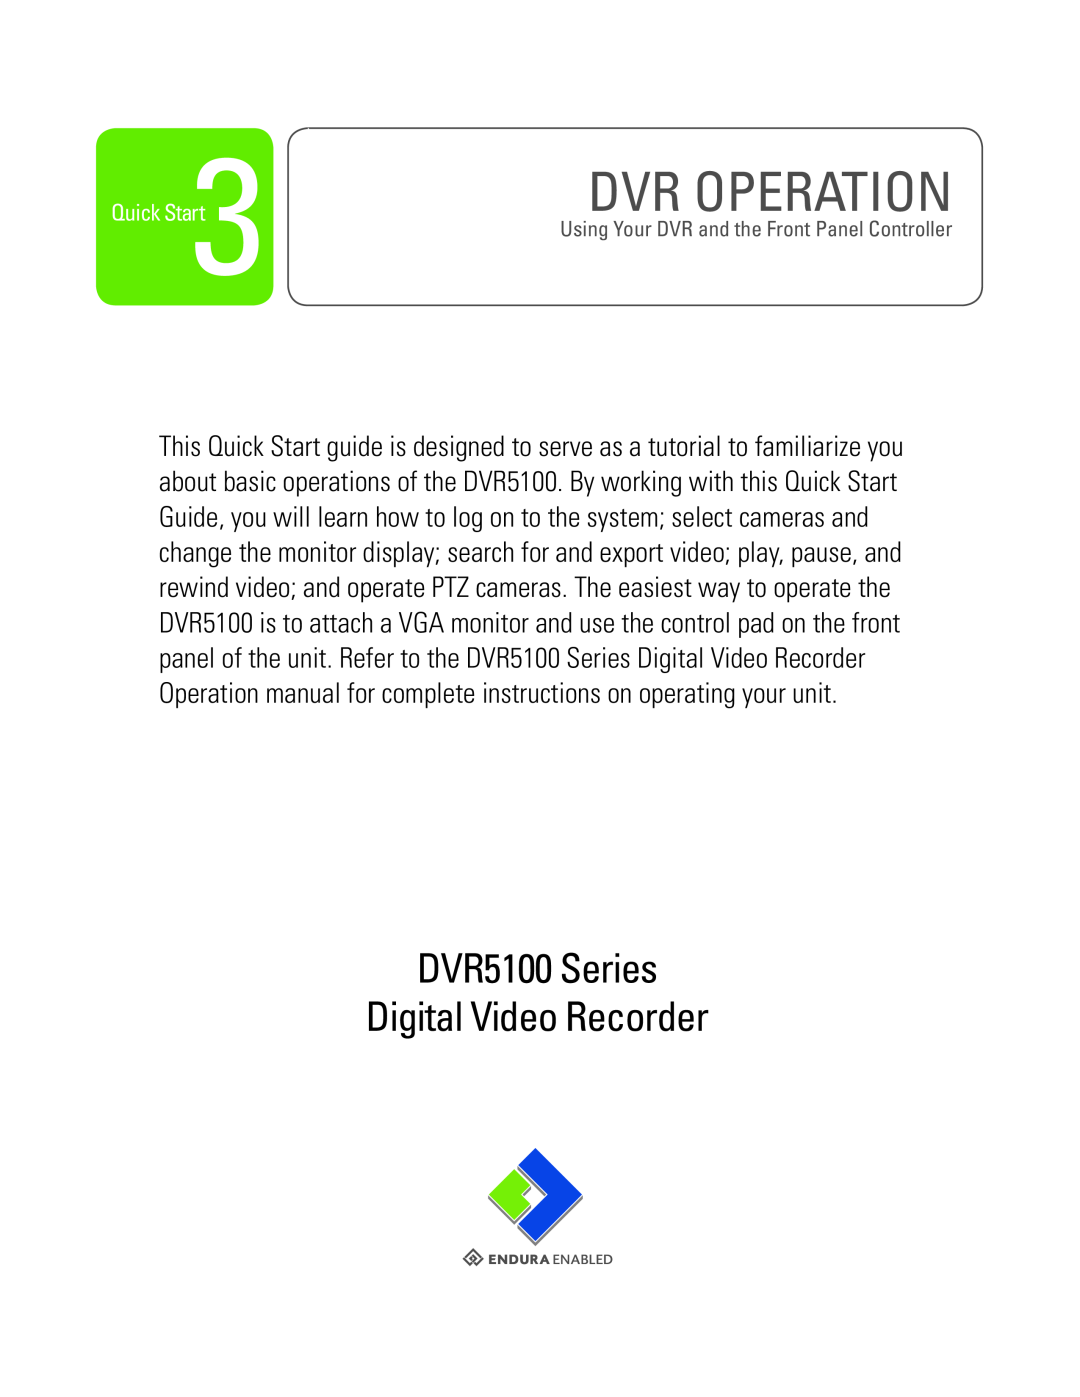 Pelco quick start Dvr Operation, DVR5100 Series Digital Video Recorder, Quick Start 